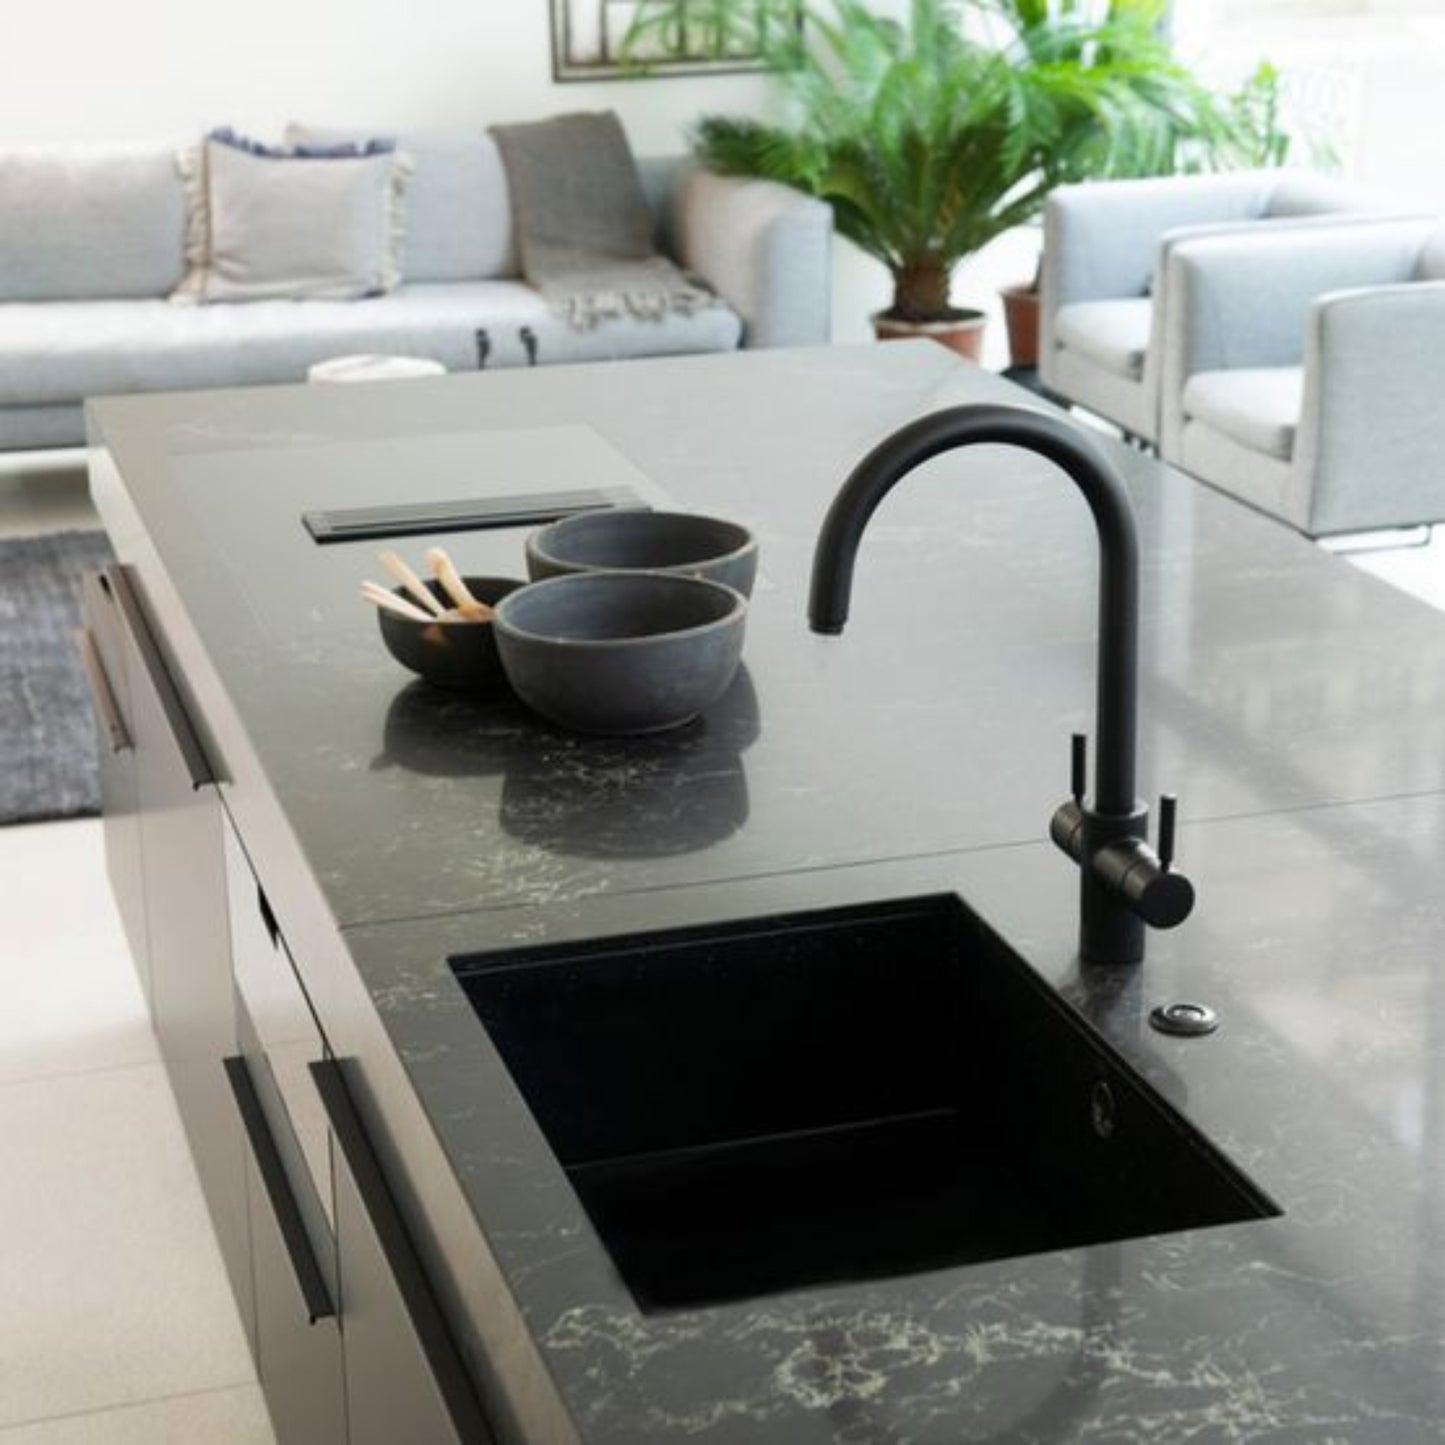 InSinkErator 3N1 J Spout Tap (Velvet Black) lifestyle shot in kitchen with marble worktop black